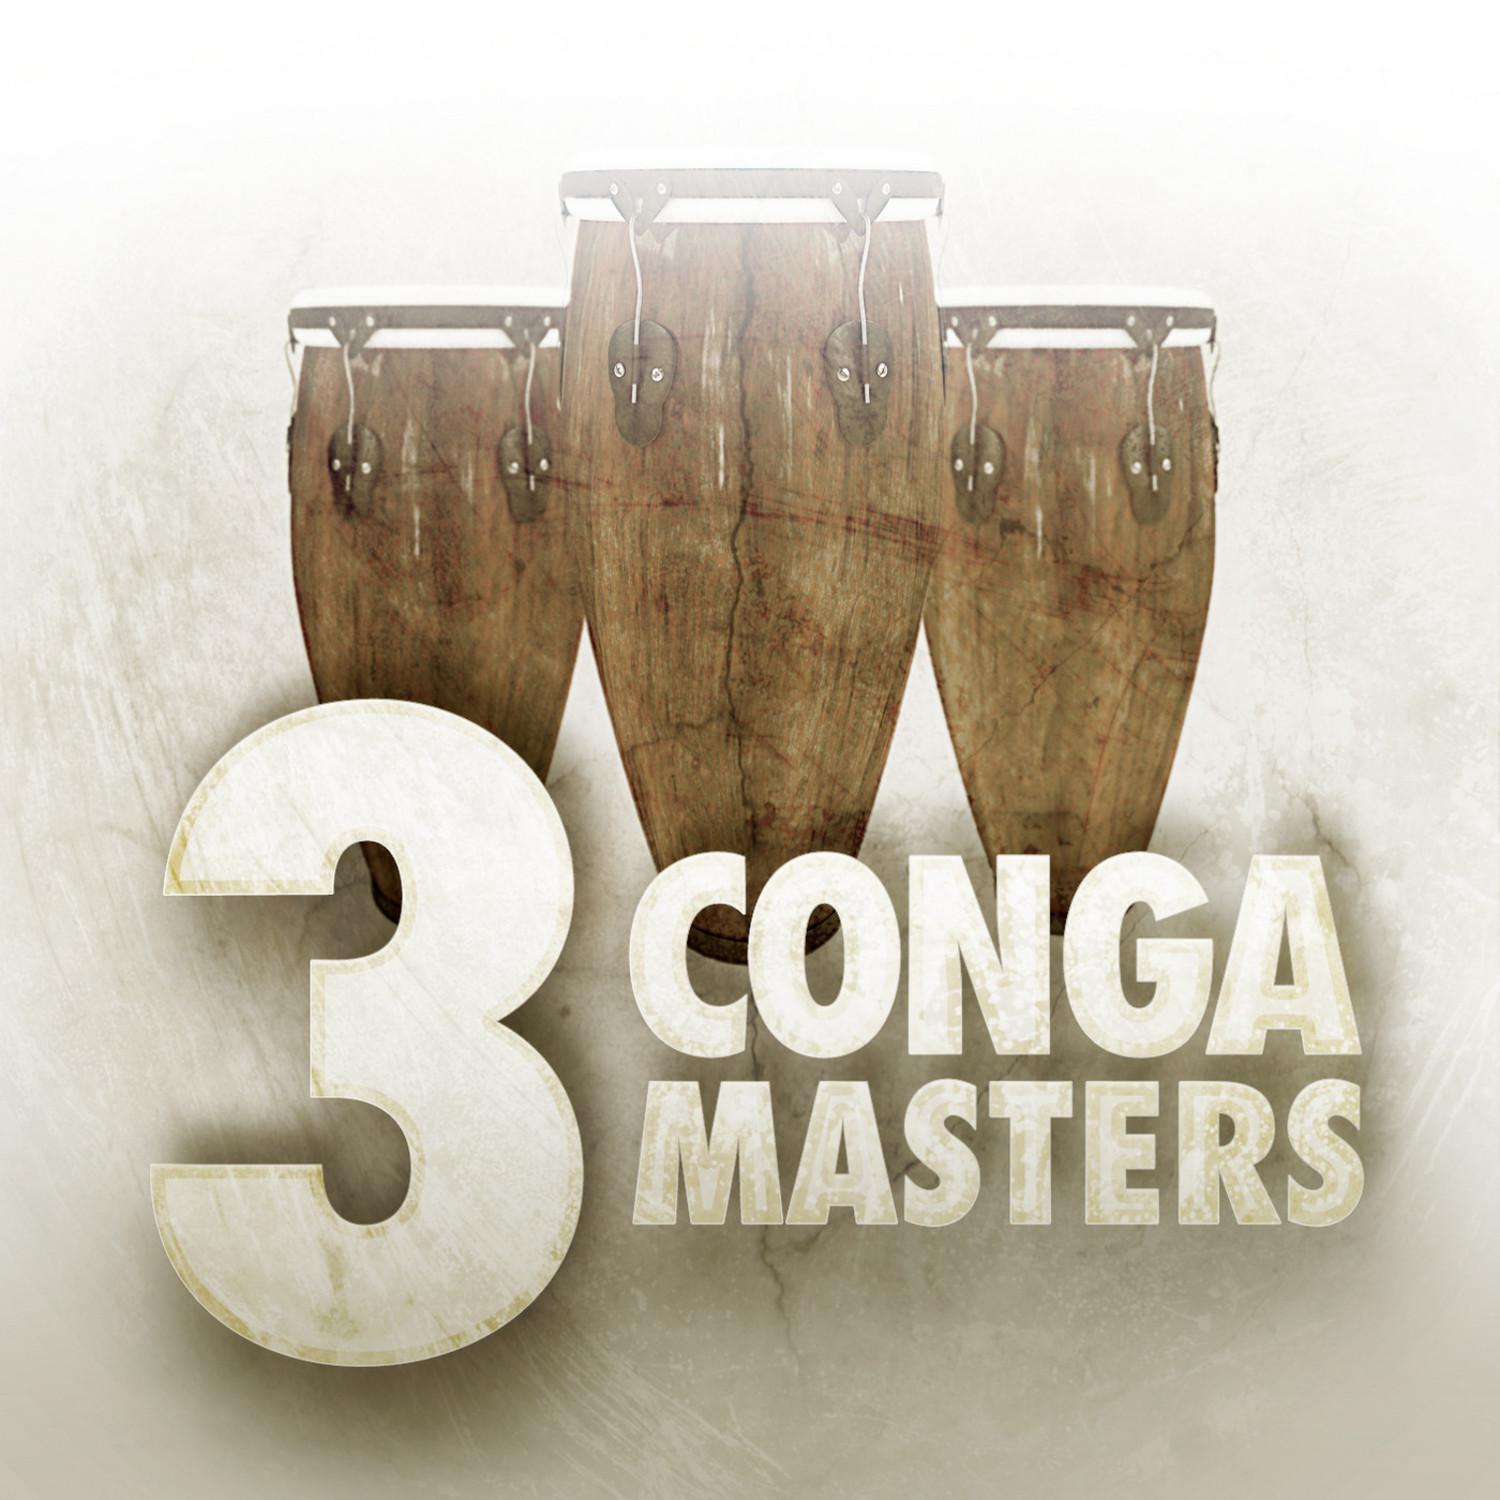 3 Conga Masters